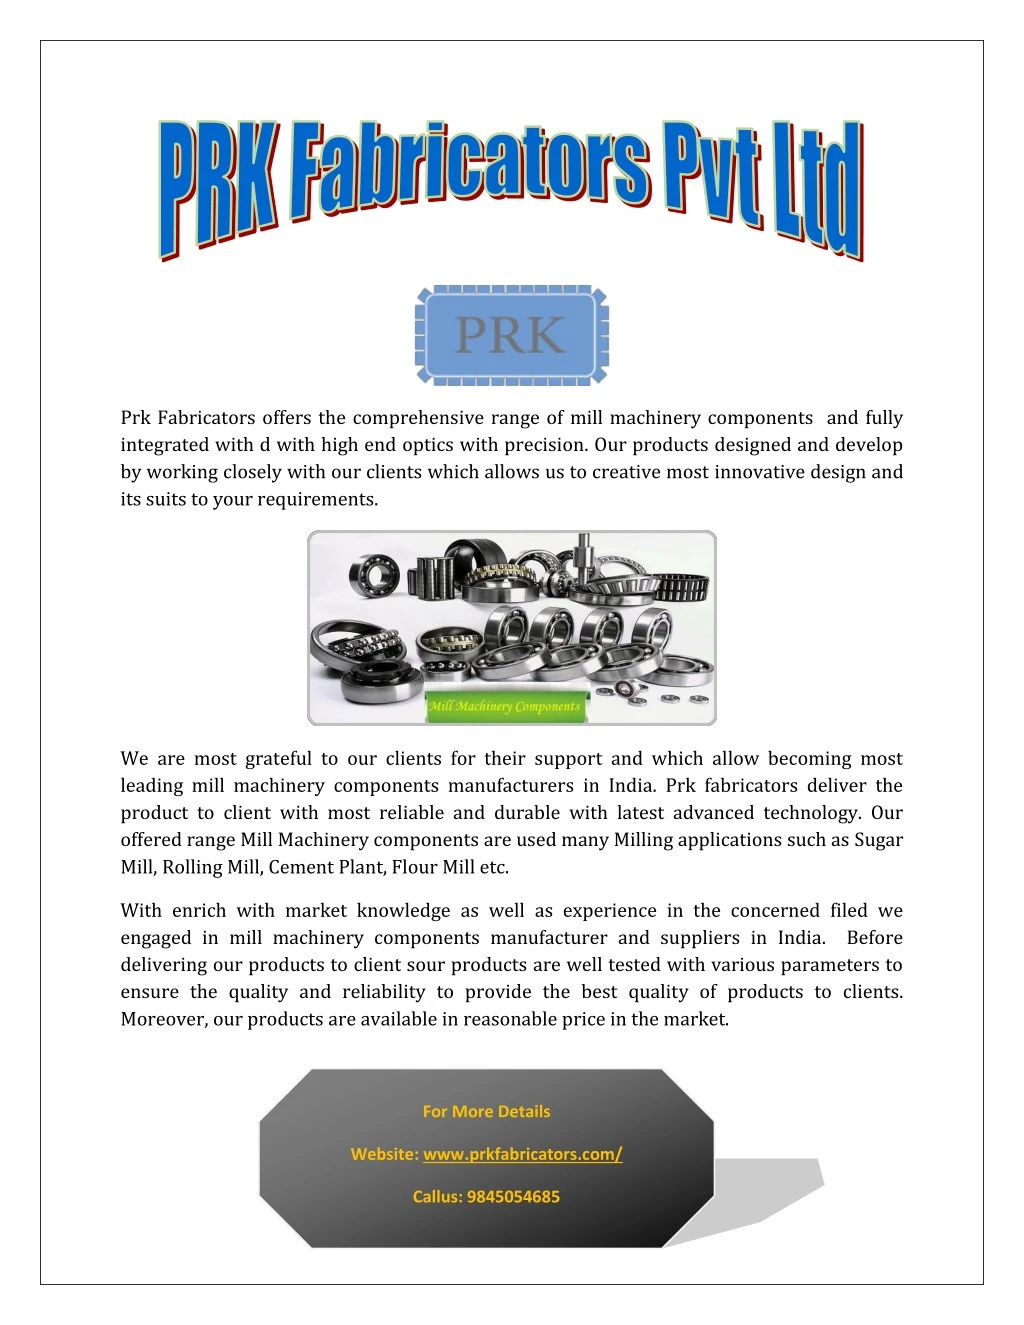 prk fabricators offers the comprehensive range